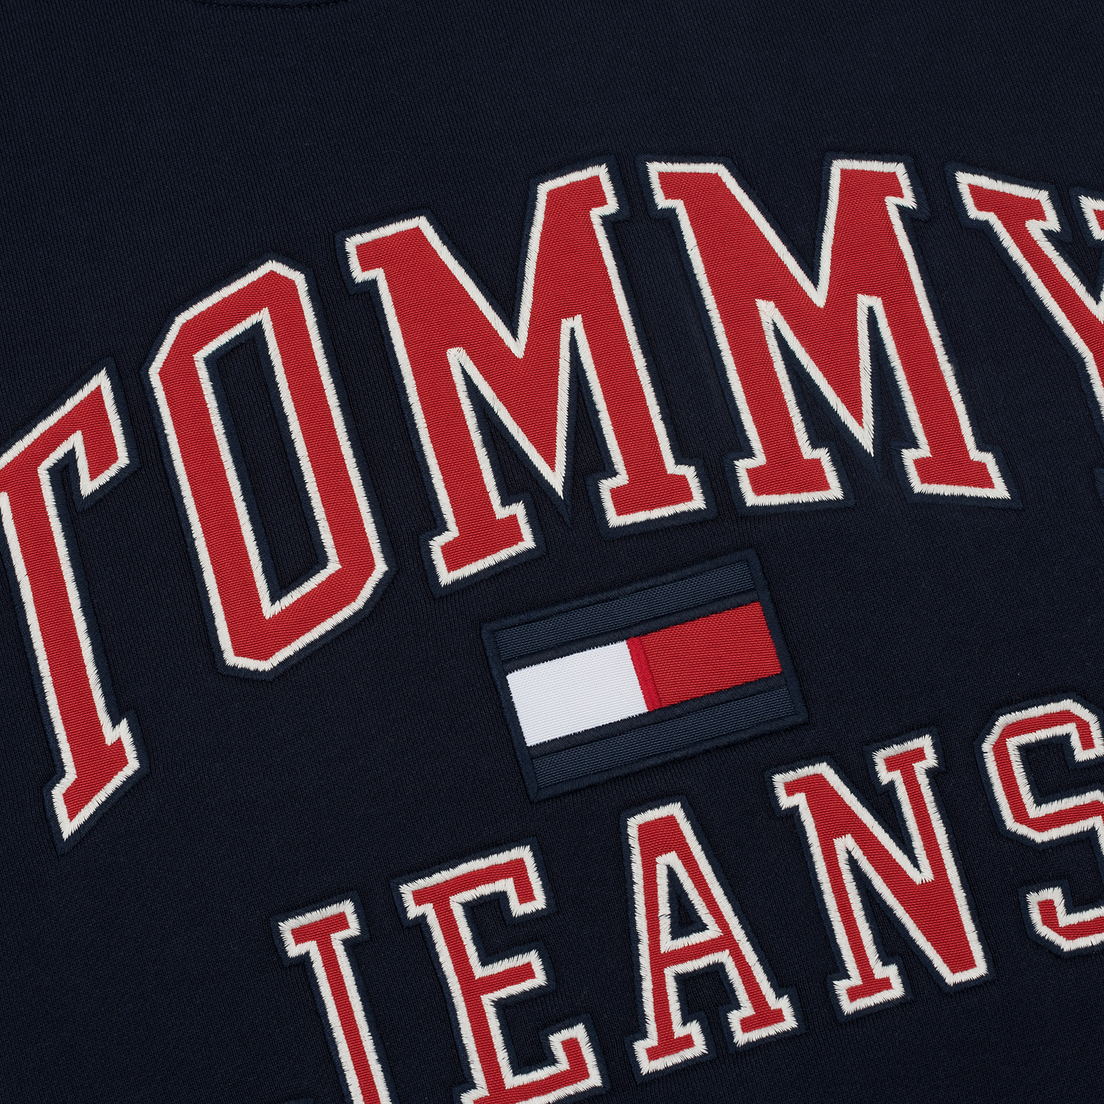 Tommy Jeans Женская толстовка 90's CN